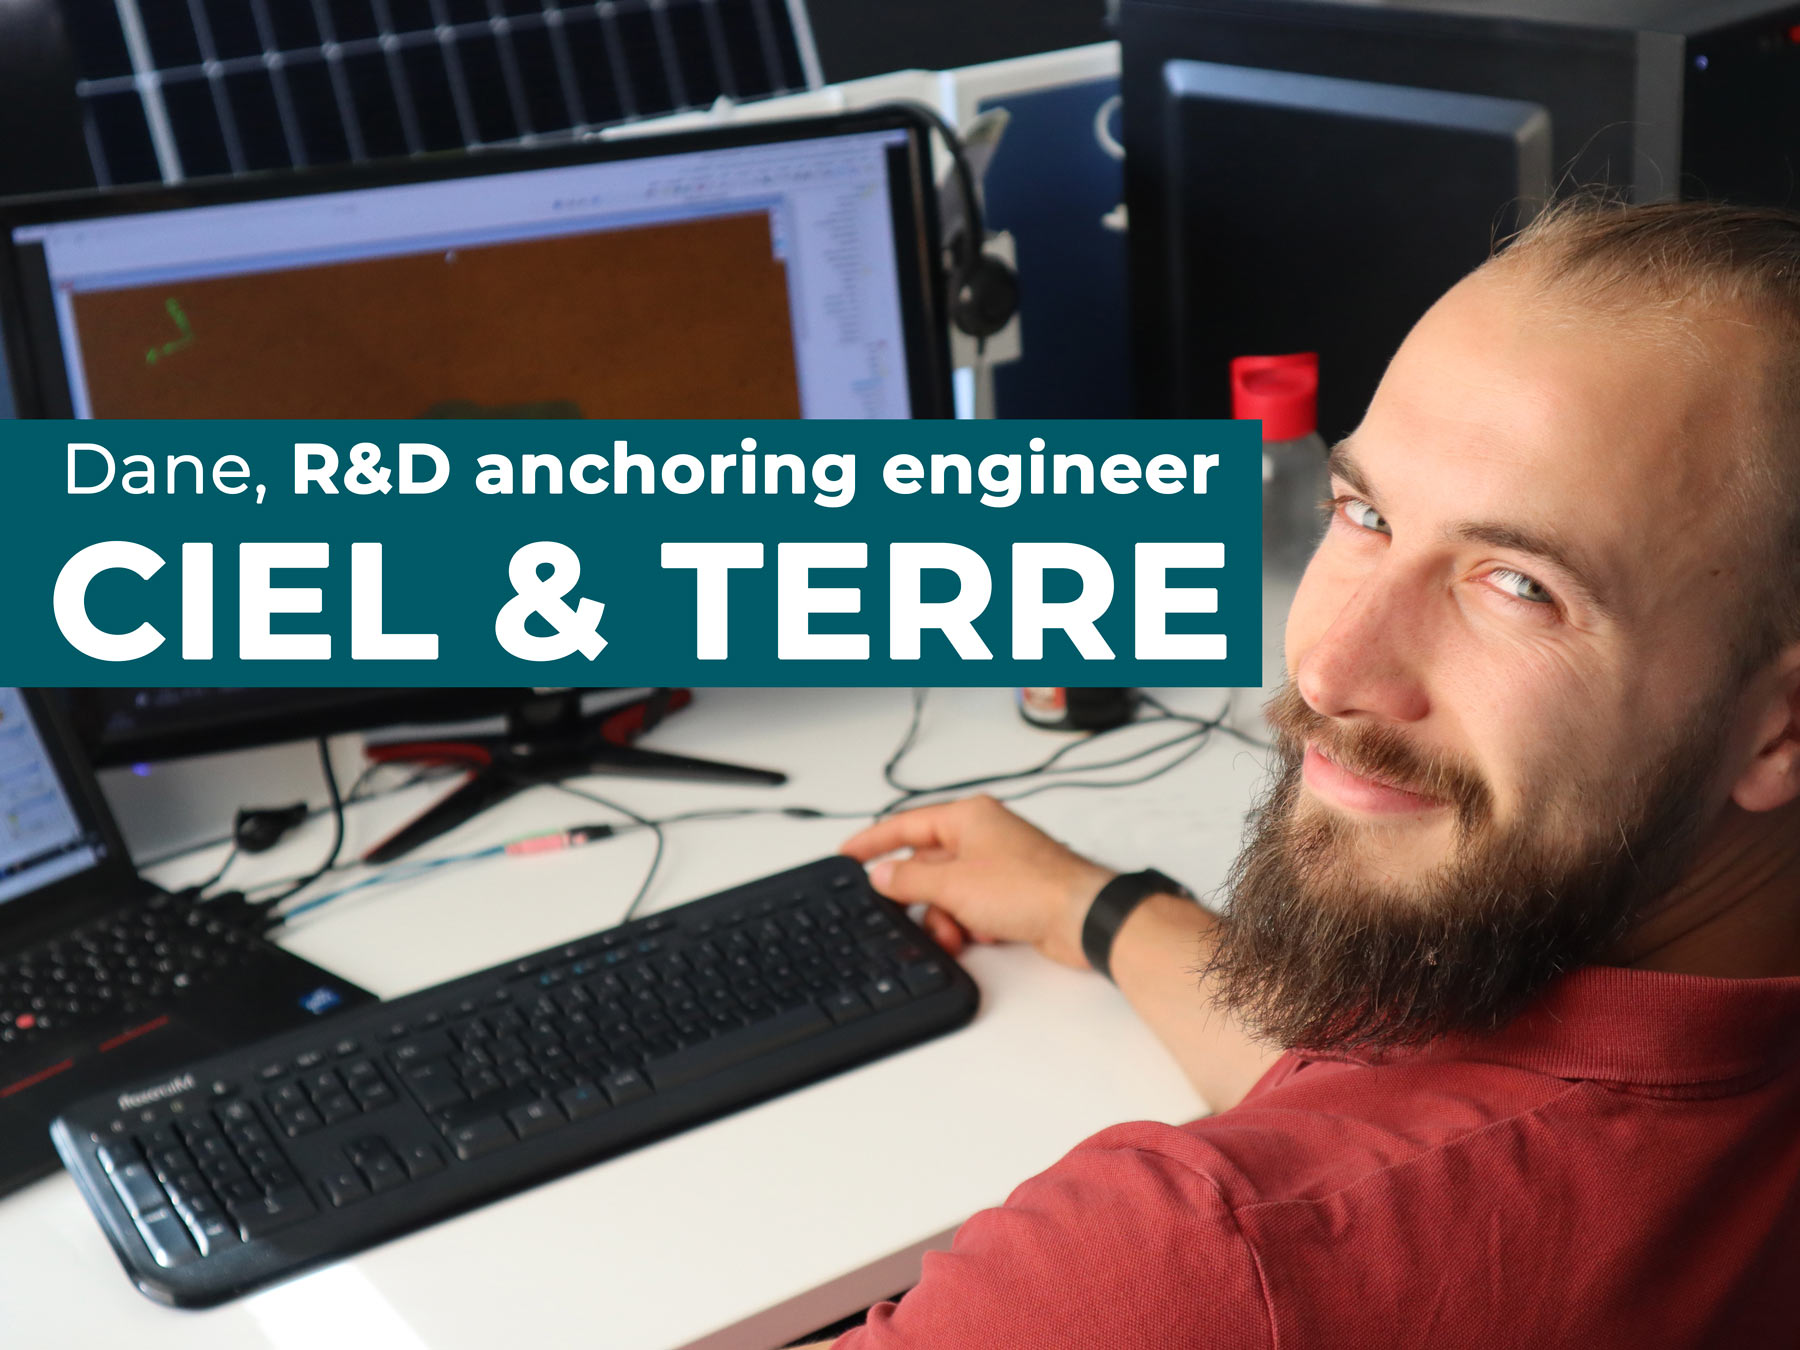 Ciel & Terre anchoring engineer